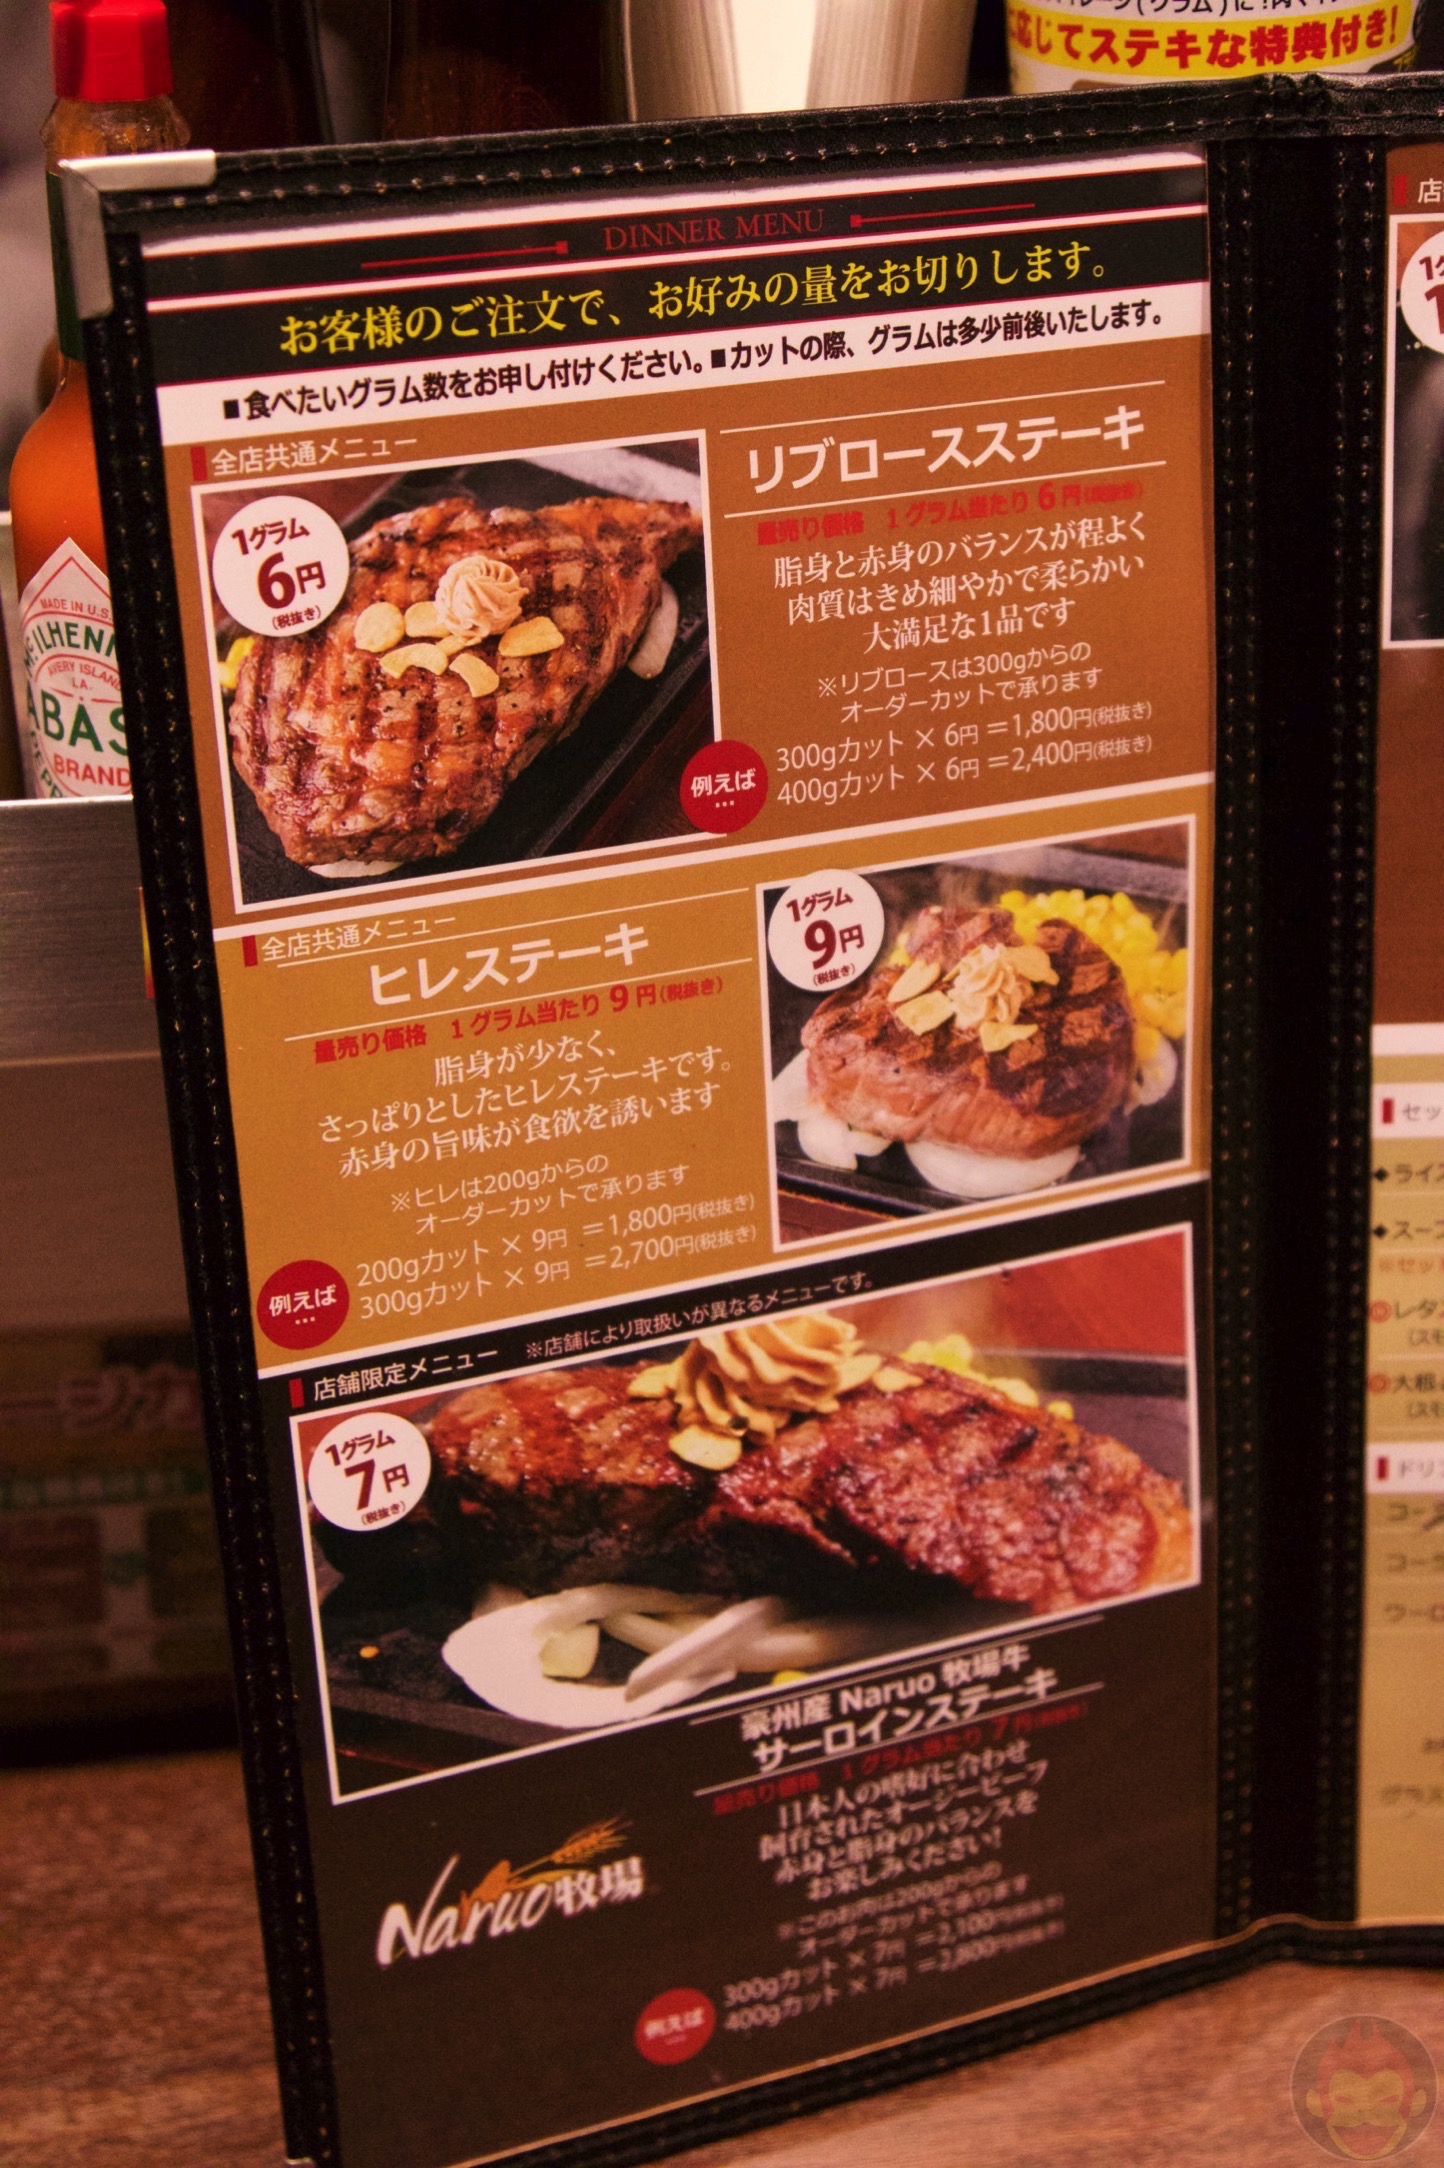 Ikinari-Steak-Tsunashima-05.jpg